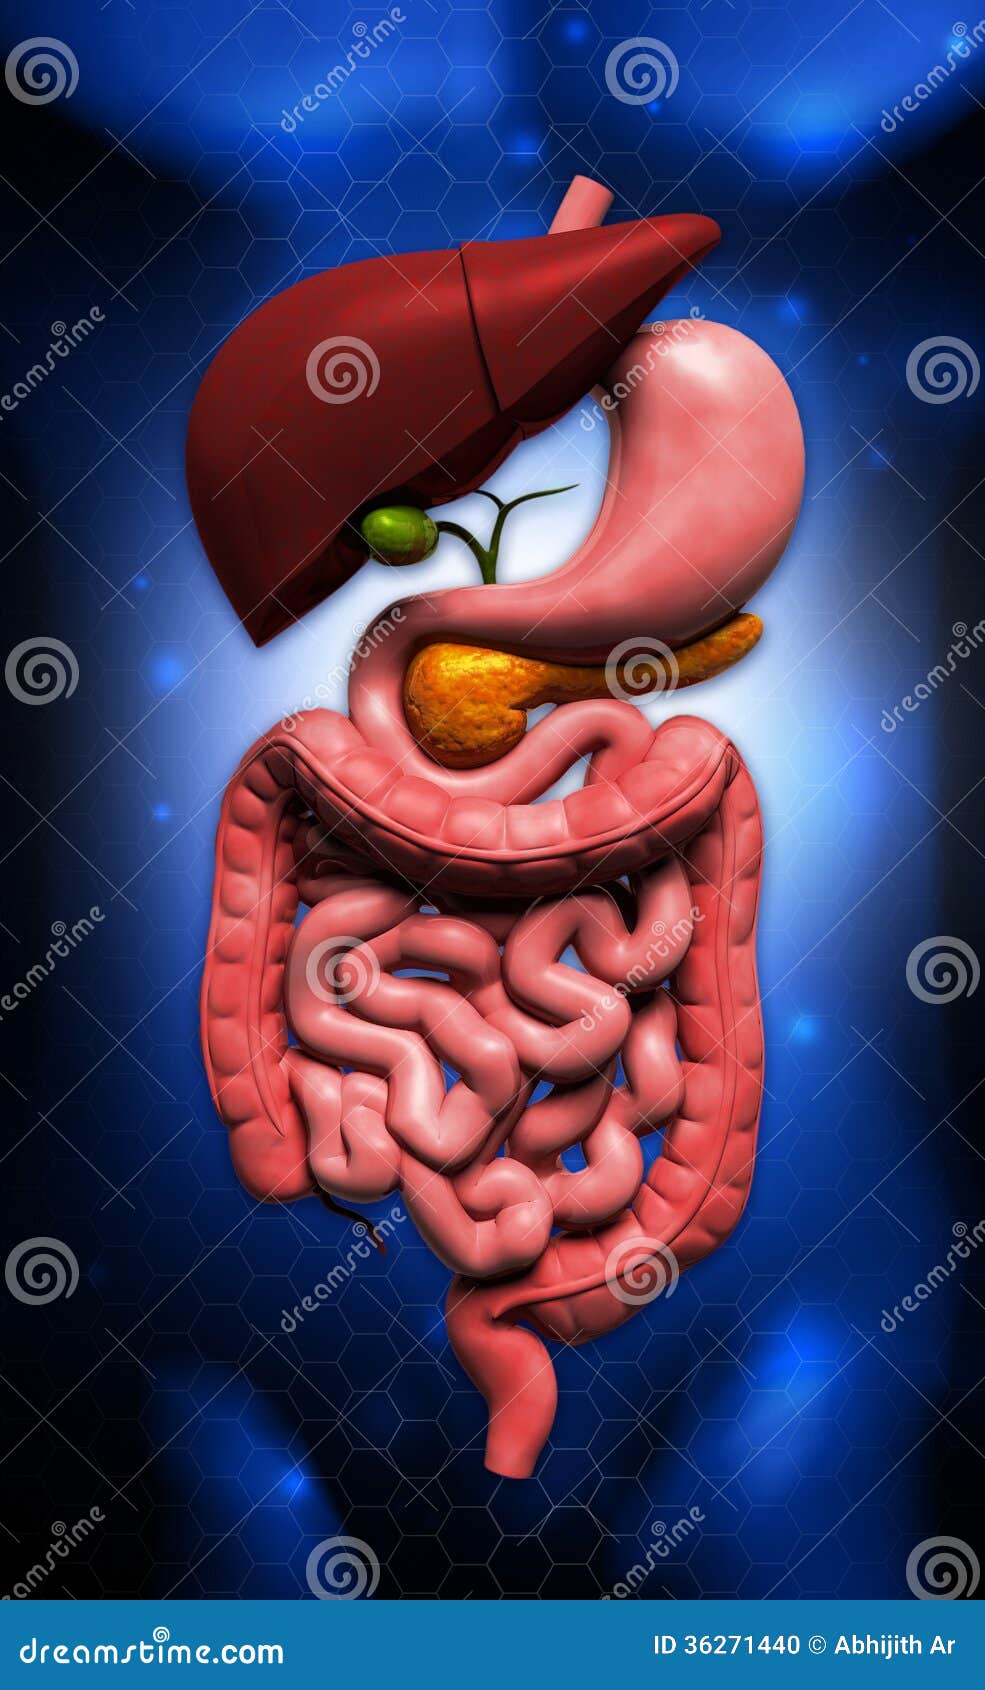 Human digestive system stock photo. Image of illustrative - 36271440